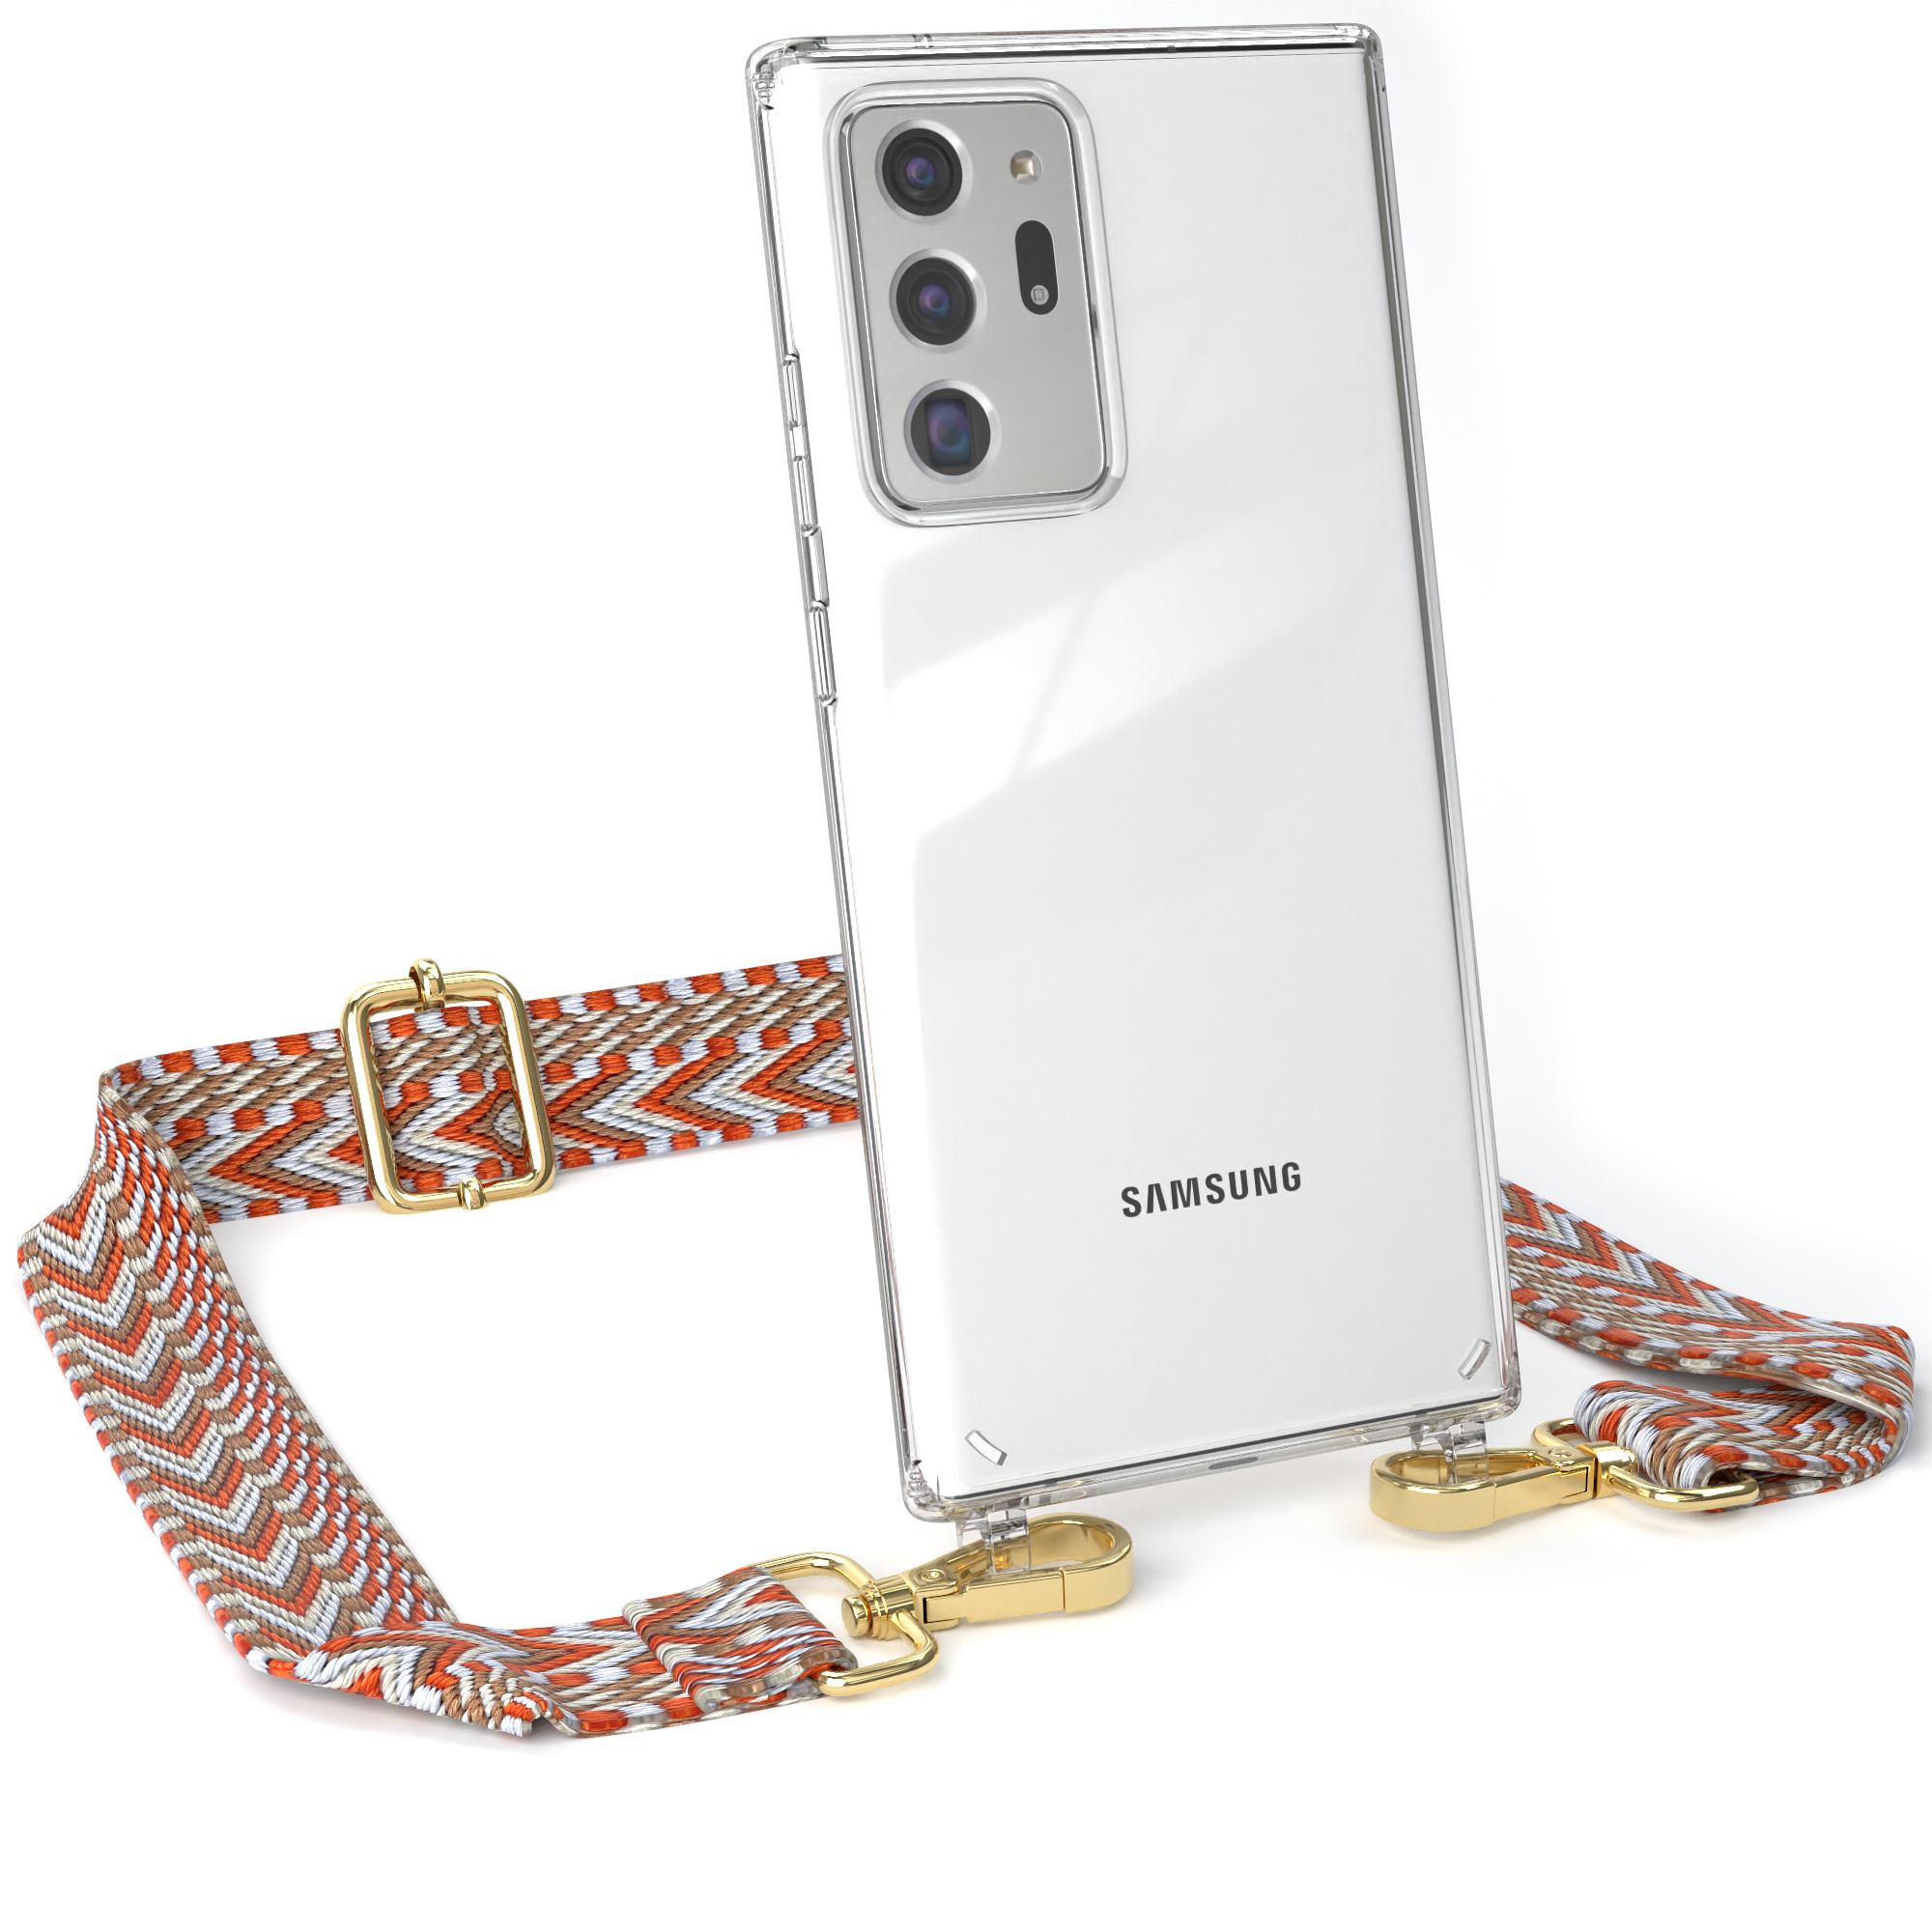 EAZY CASE Transparente Style, Rot 20 Umhängetasche, Handyhülle Boho 20 Kordel Galaxy Note / Ultra Note Ultra 5G, Samsung, / mit Hellblau